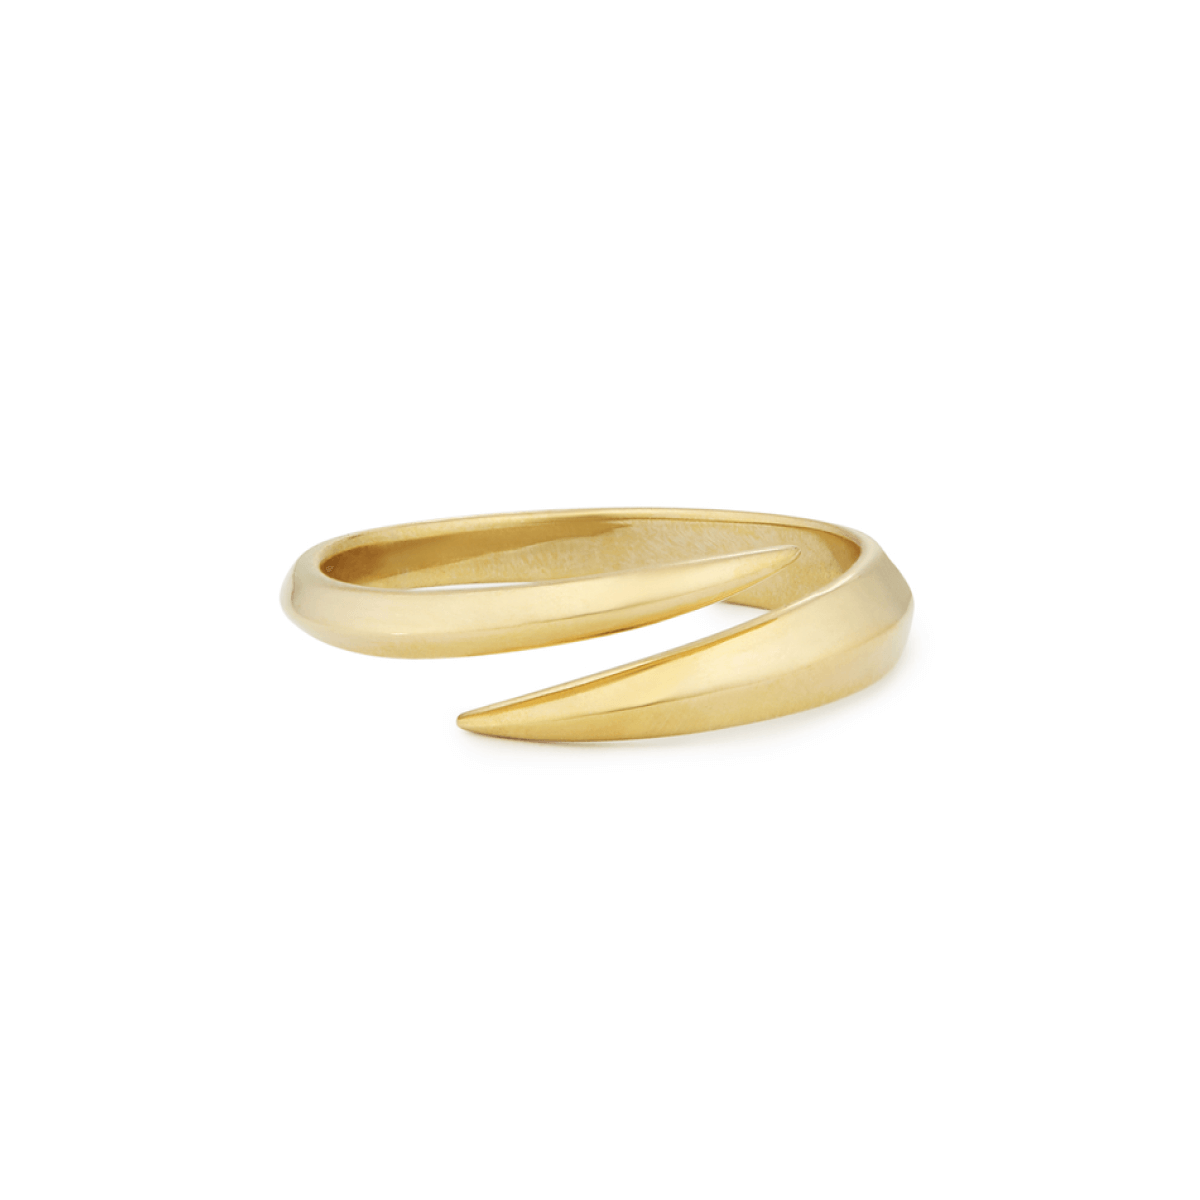 Sophie Ratner ring